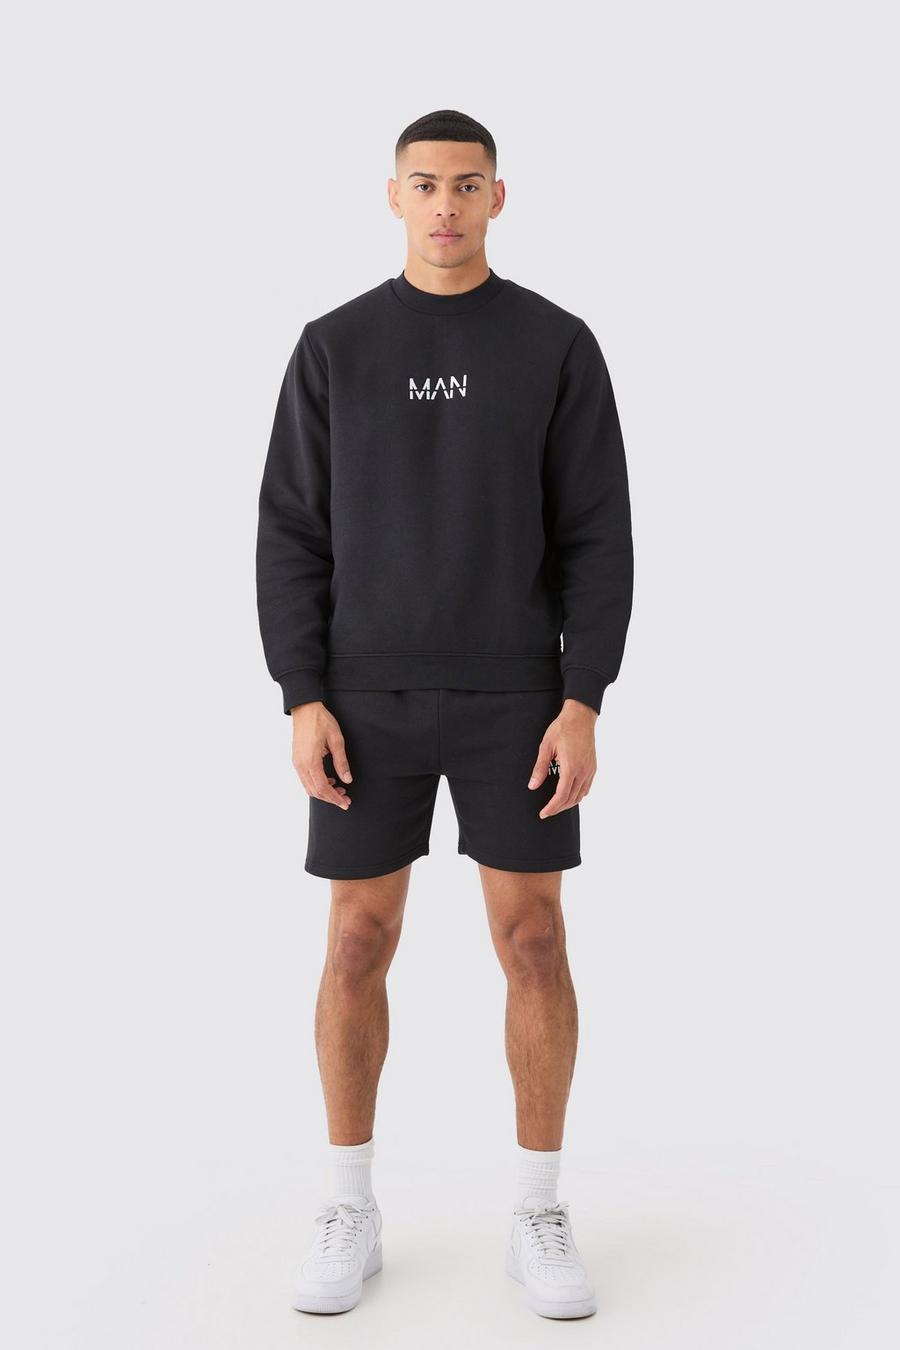 Kurzer Man Sweatshirt-Trainingsanzug, Black